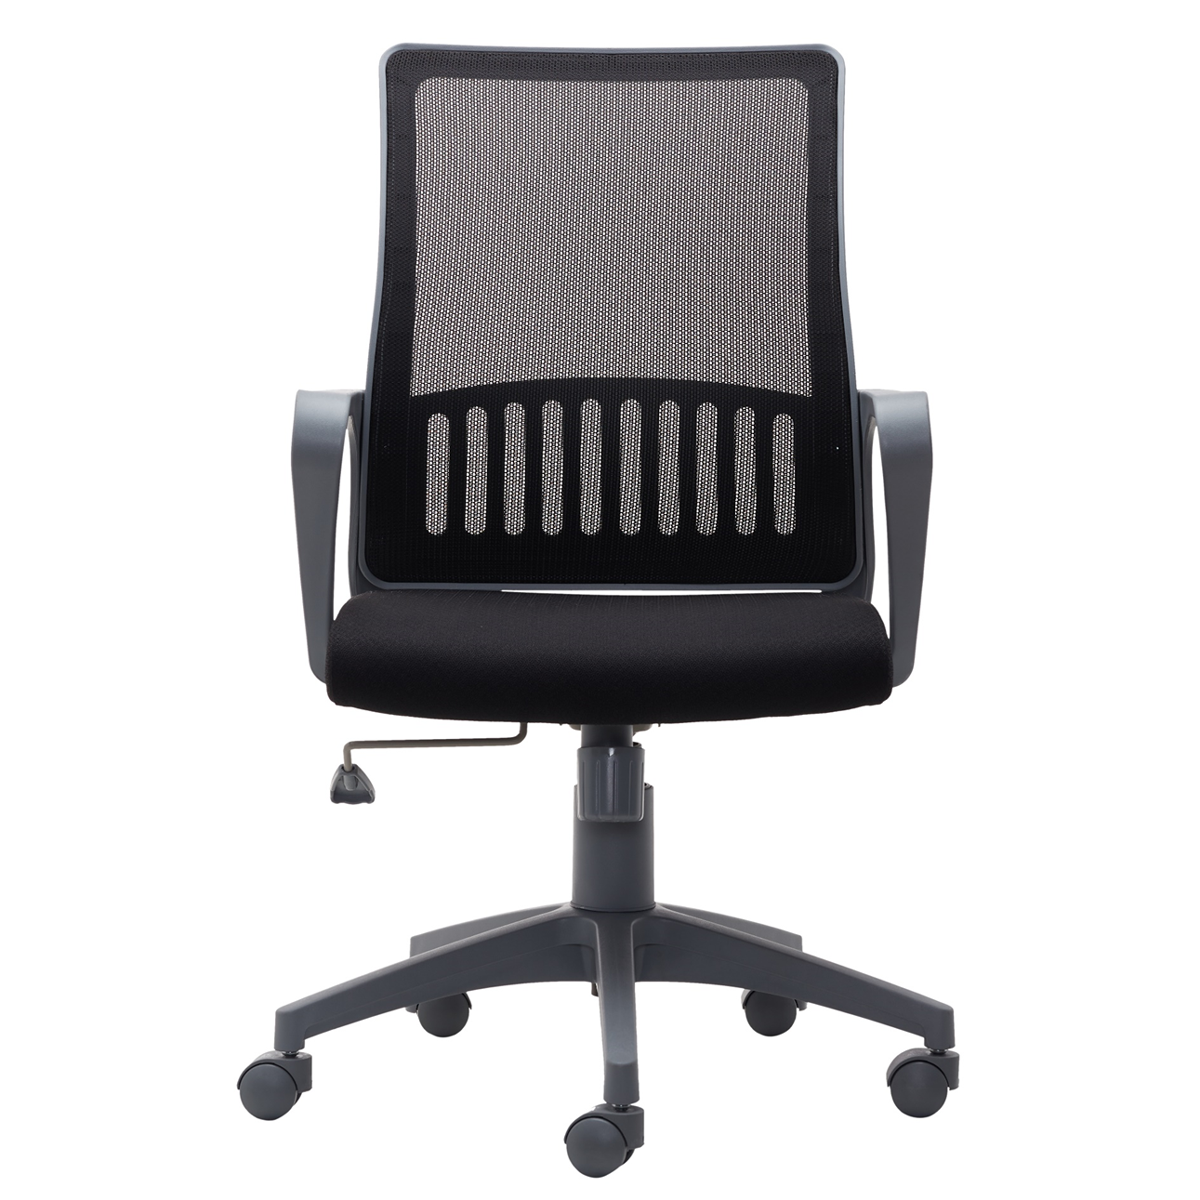 Mesh office swivel chair HIFUWA X2-5